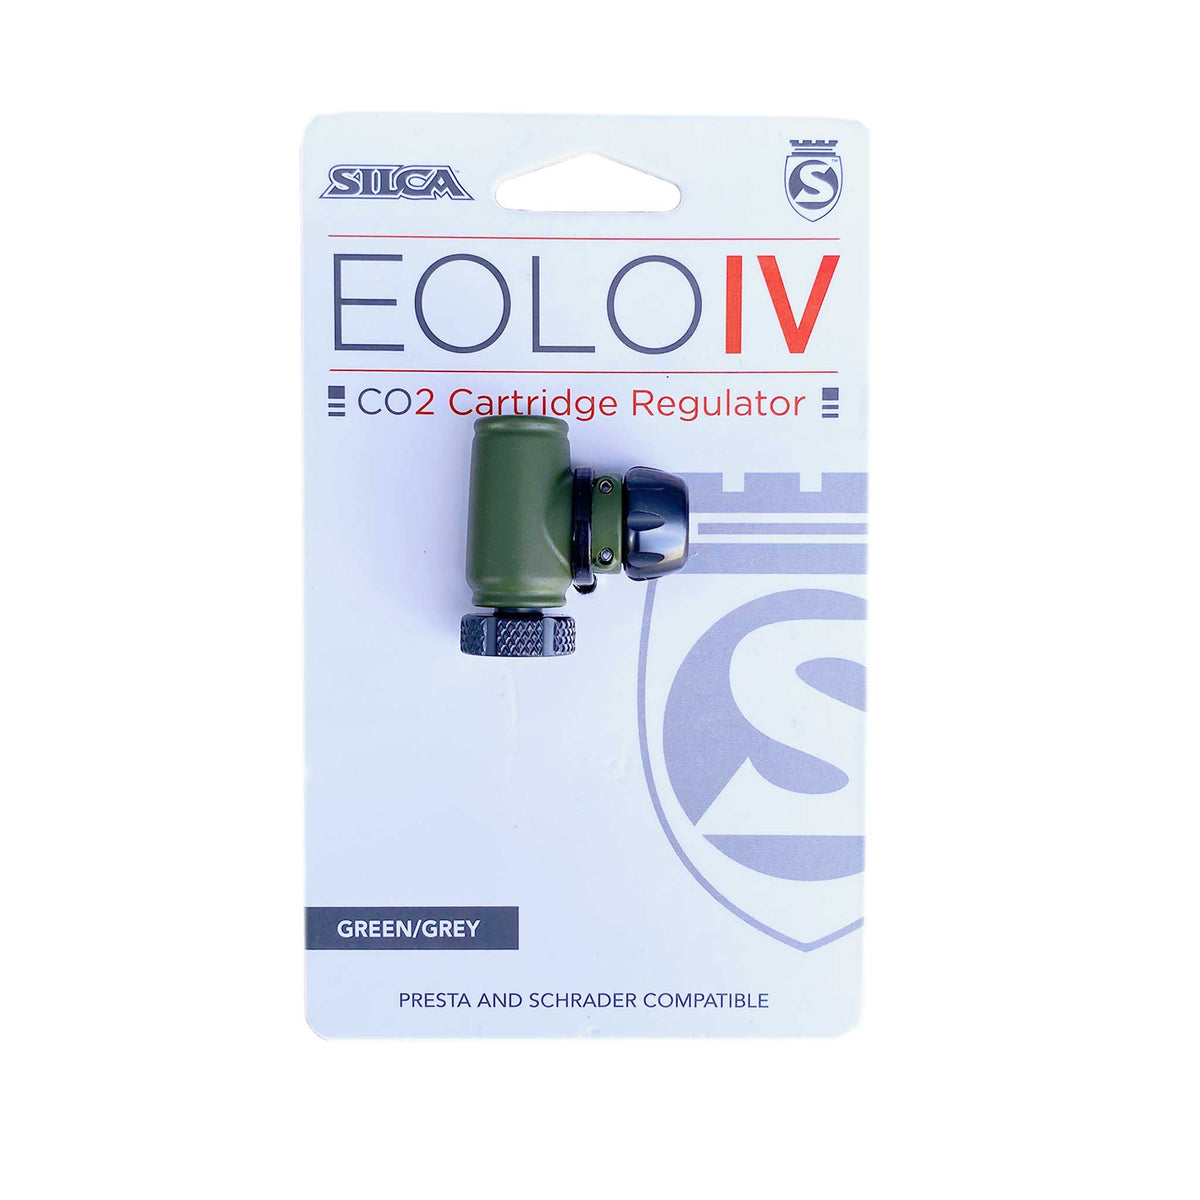 Silca EOLO IV CO2 Regulator